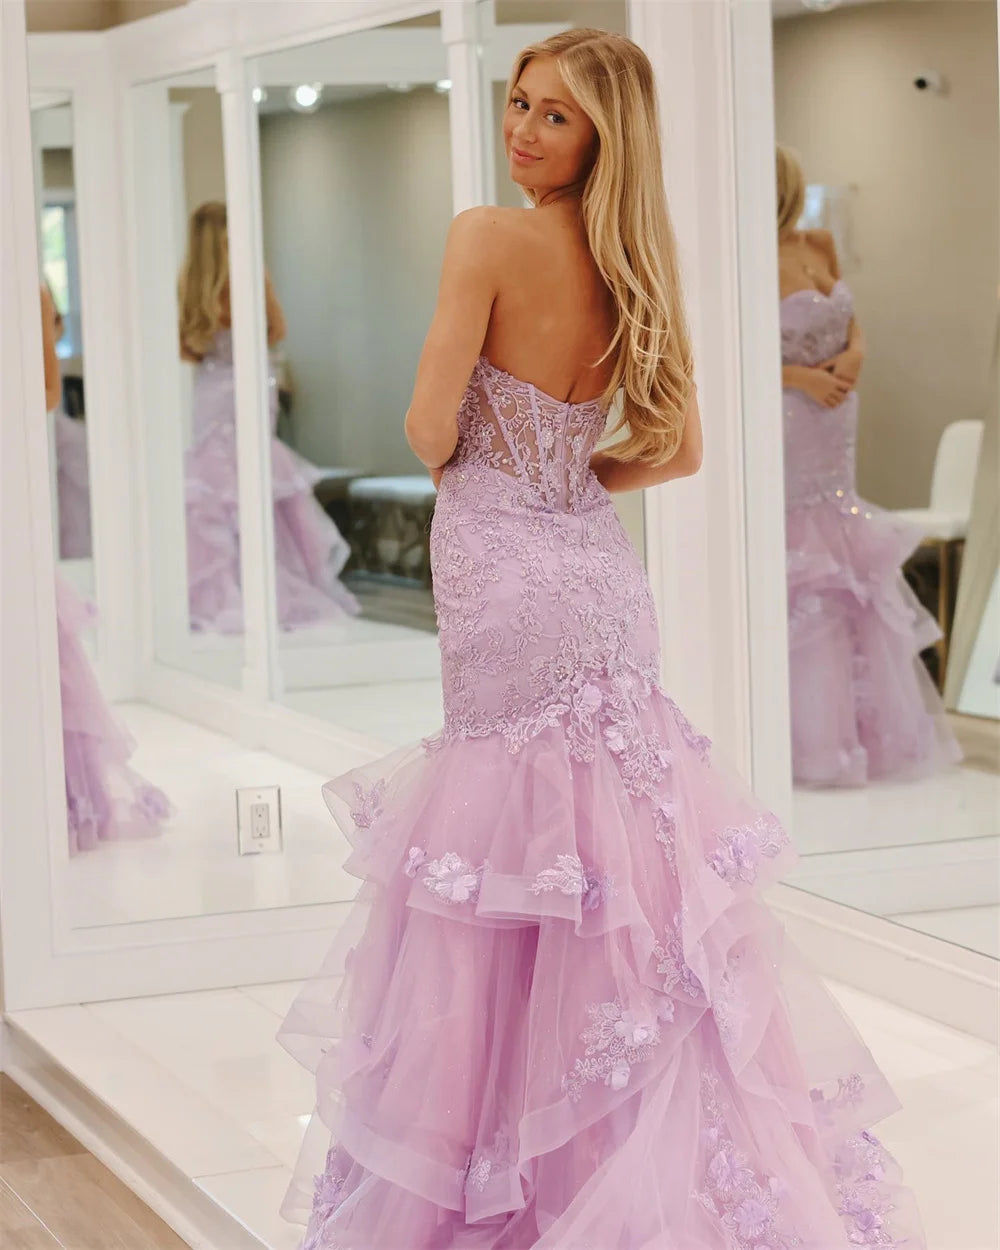 UU-Lavender Lace Embroidery Tulle Mermaid Prom Dress Backless Curve Train Fiesta Heart Shape Neck Graduation Ball